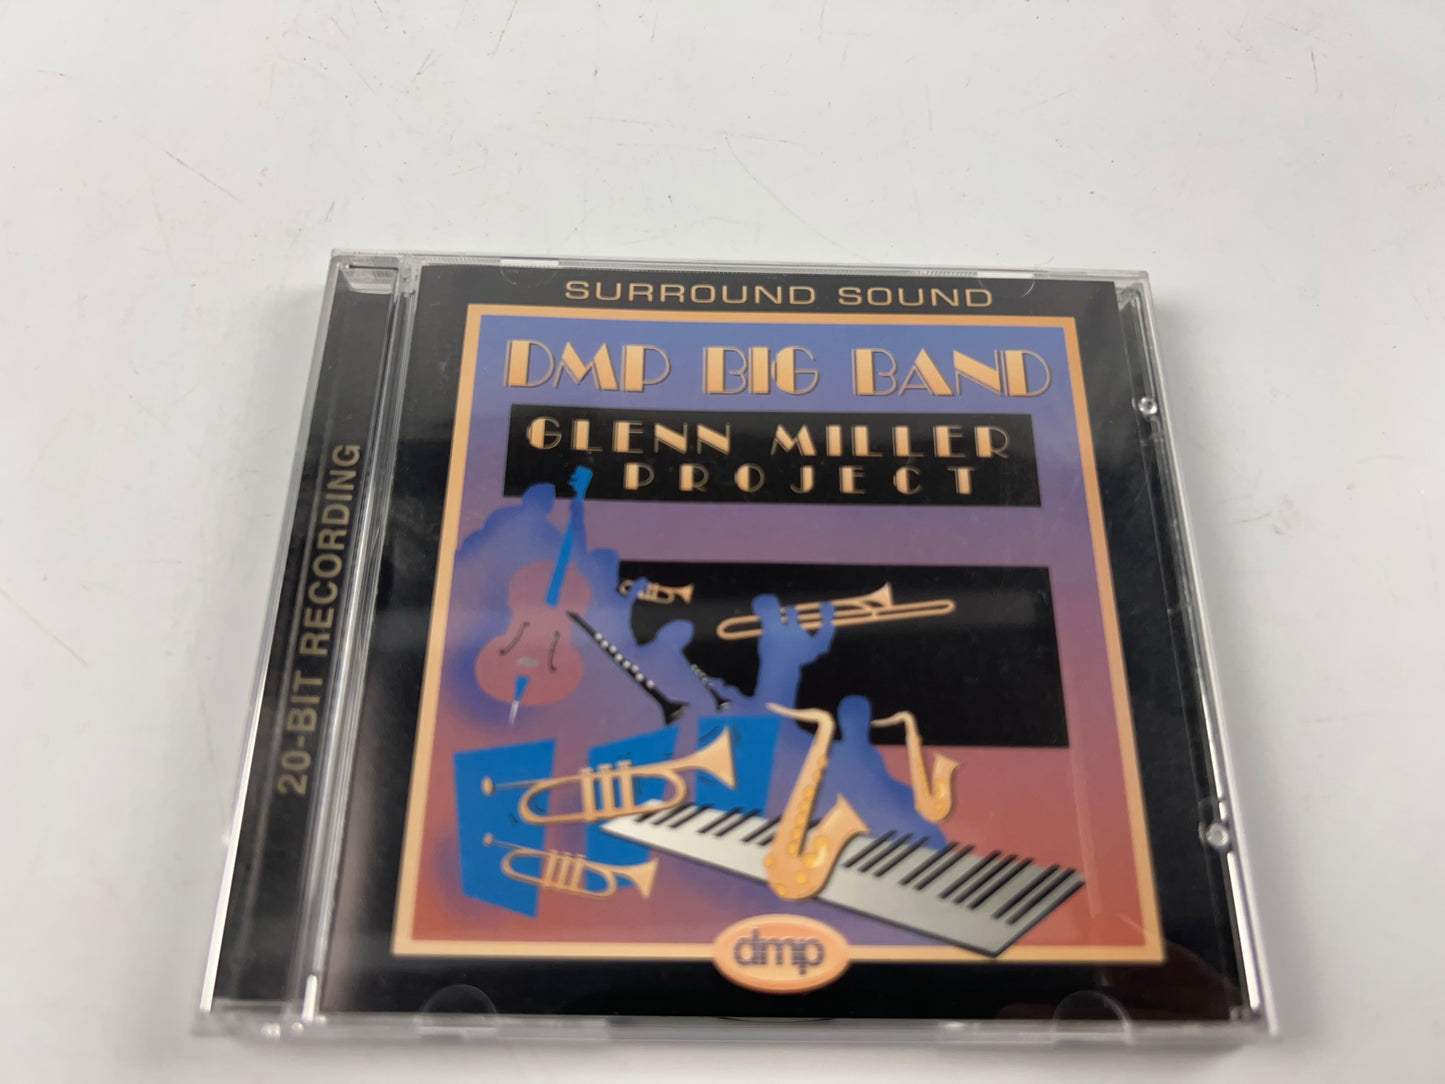 DMP Big Band : Glenn Miller Project CD (USED)